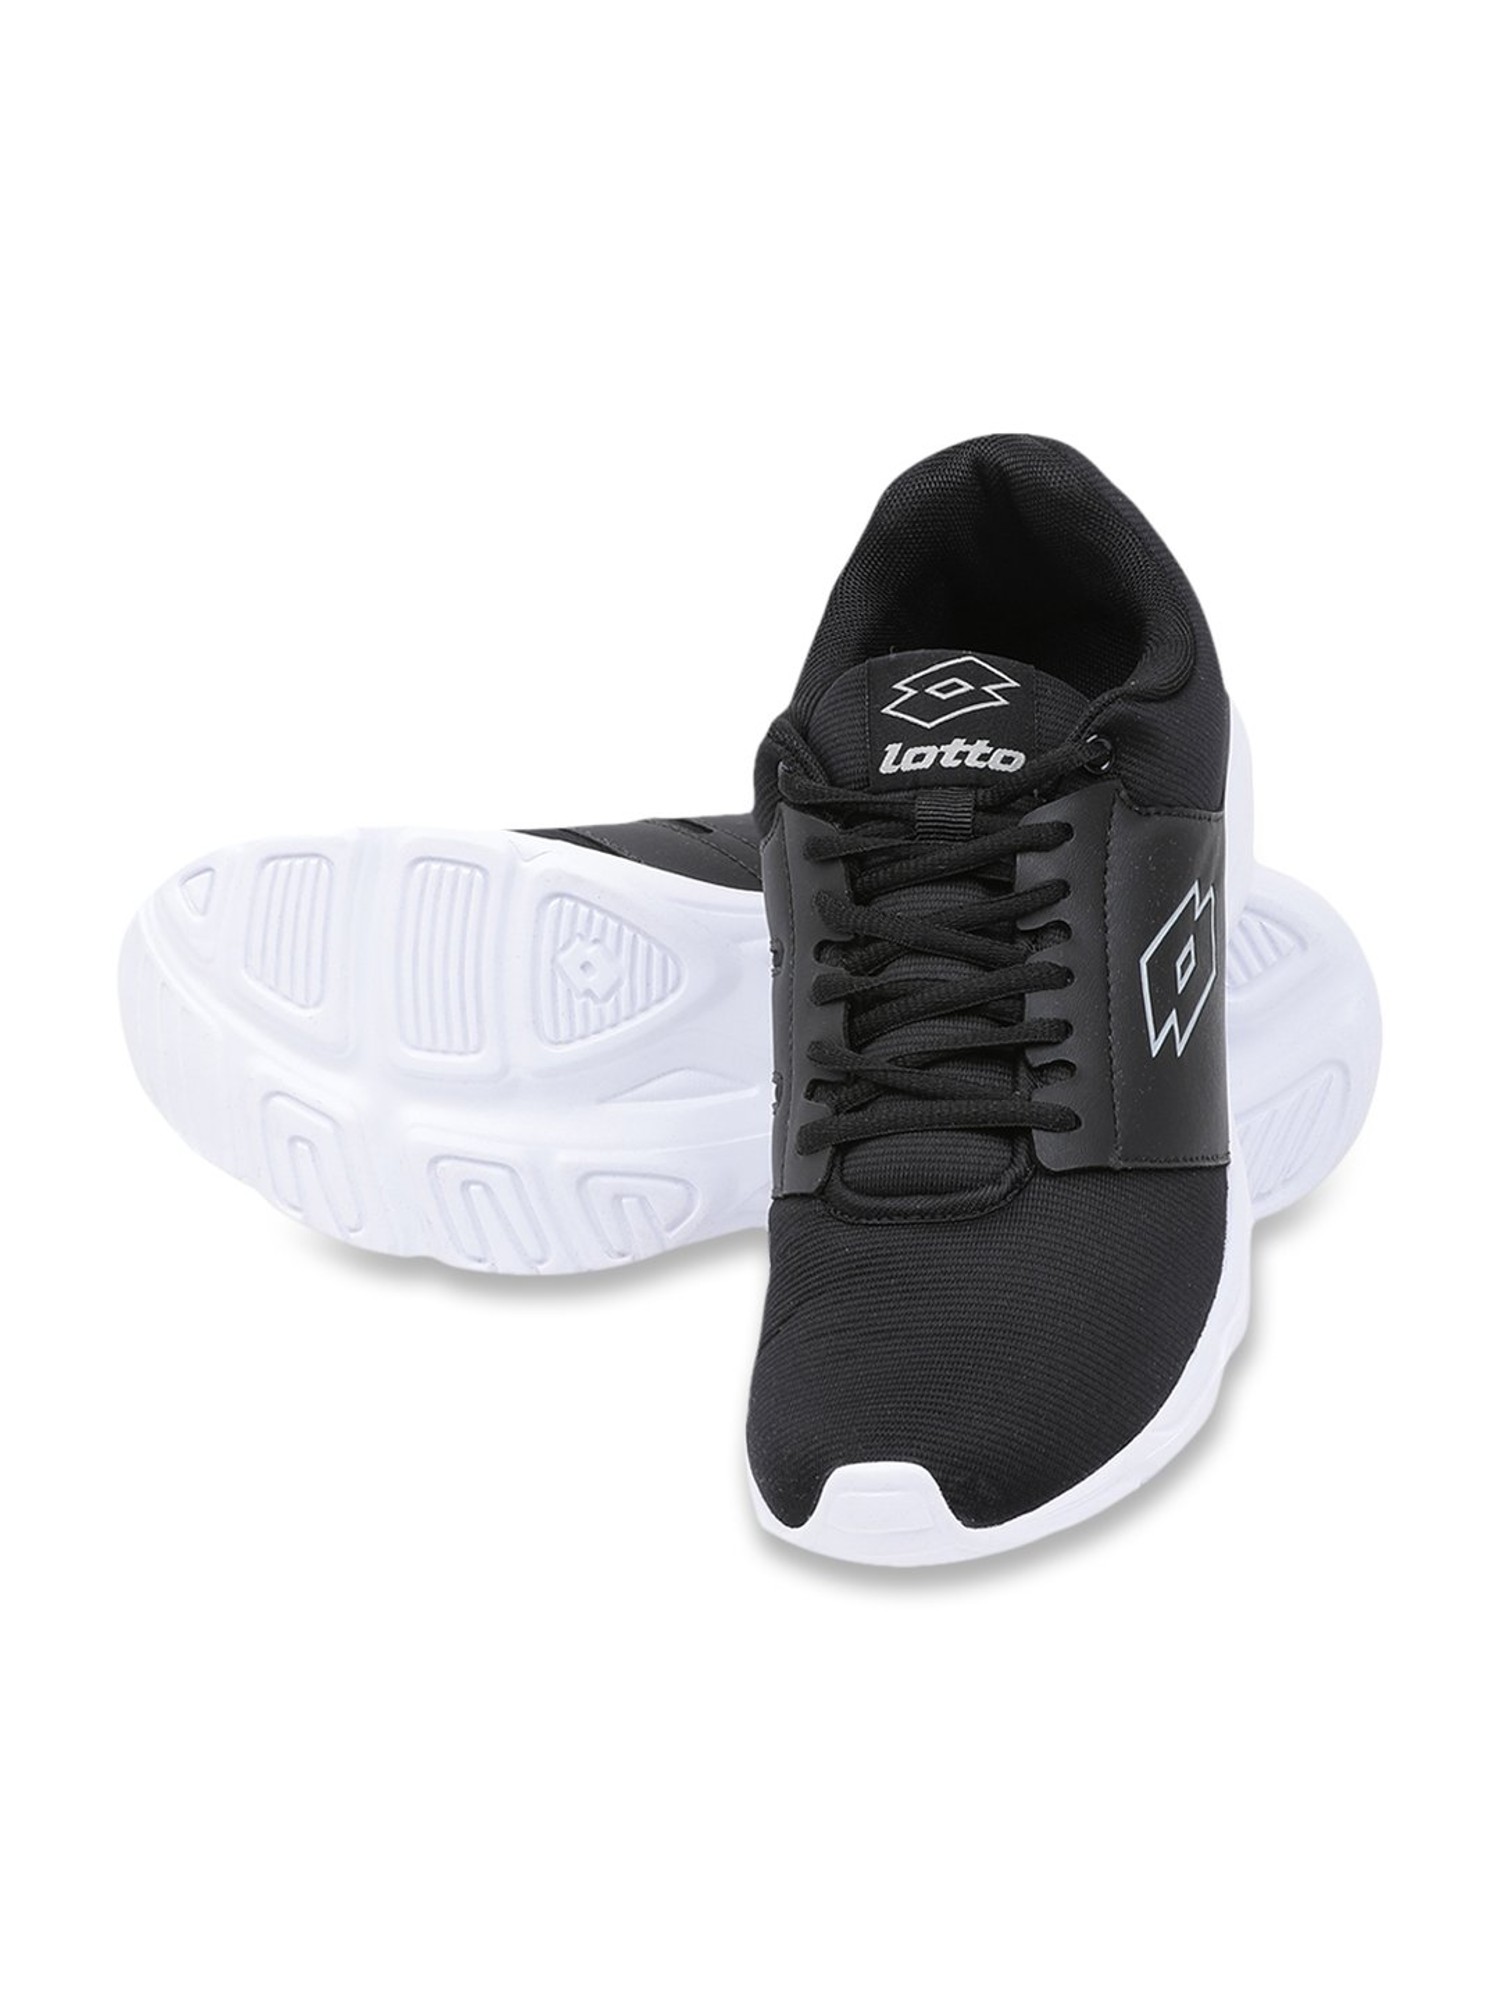 Buy Santino II Black Running Shoes Men at Best Price @ Tata CLiQ